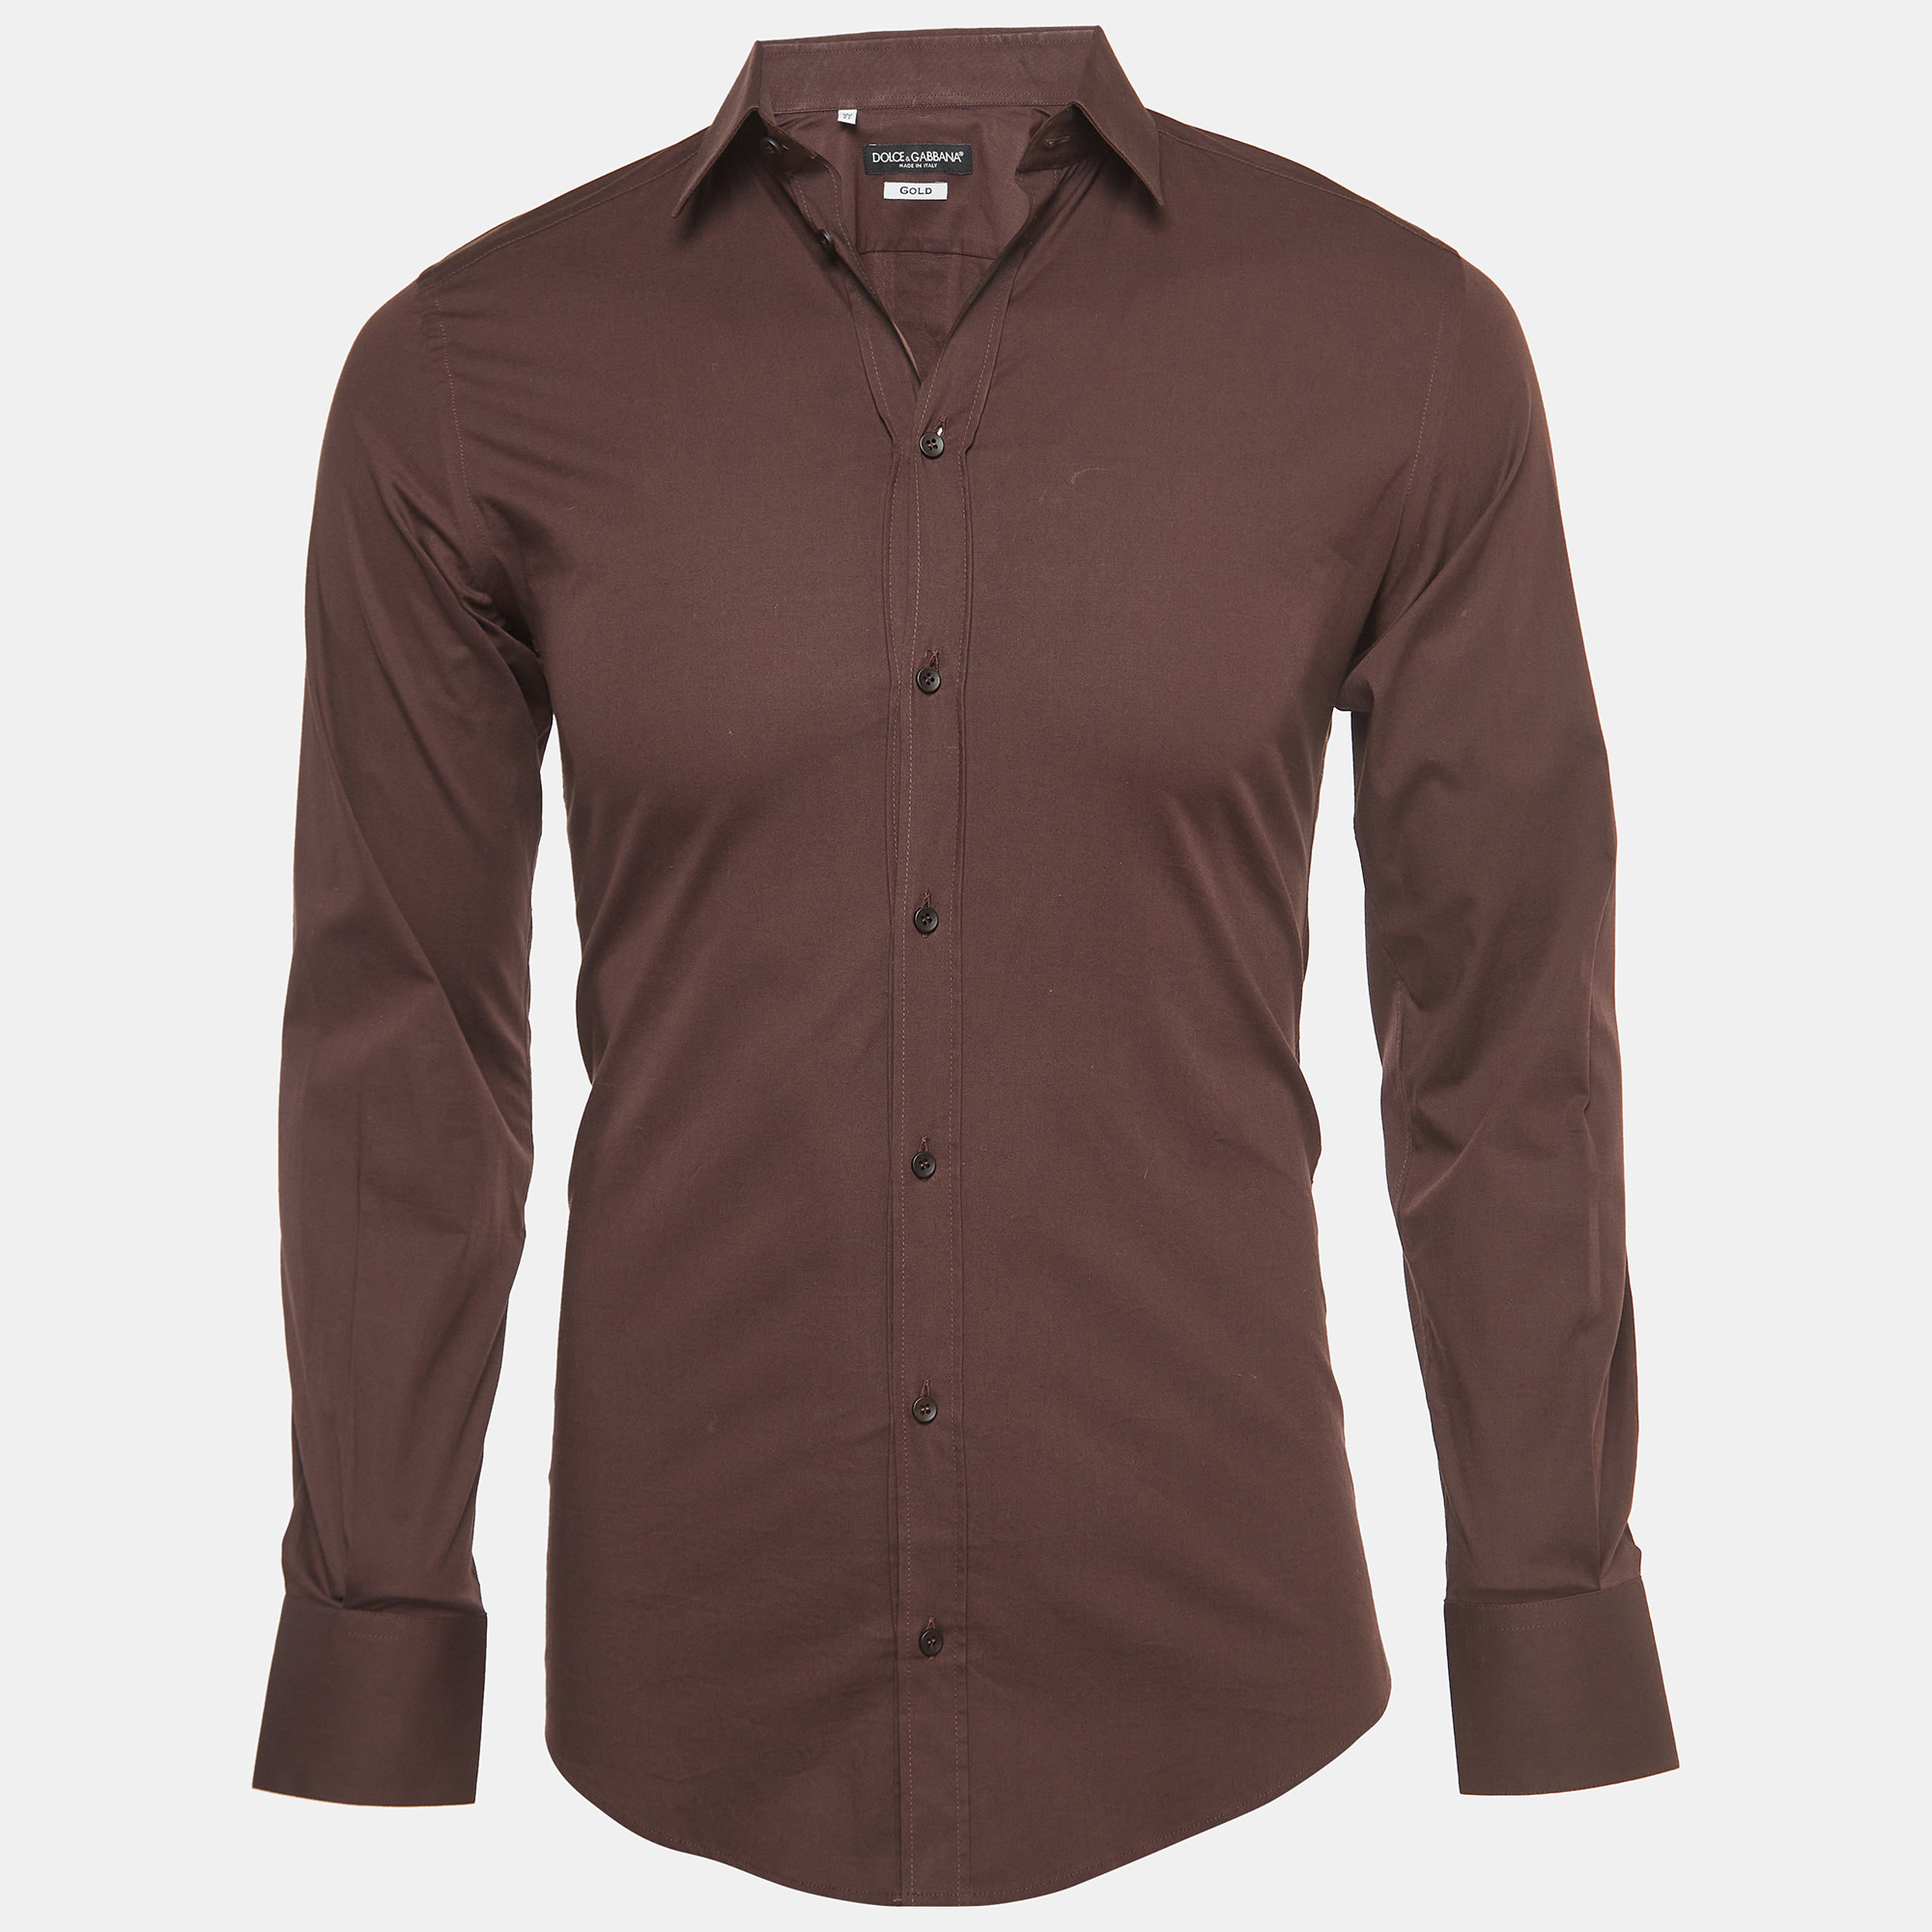 Dolce & gabbana gold brown cotton button front full sleeve shirt s